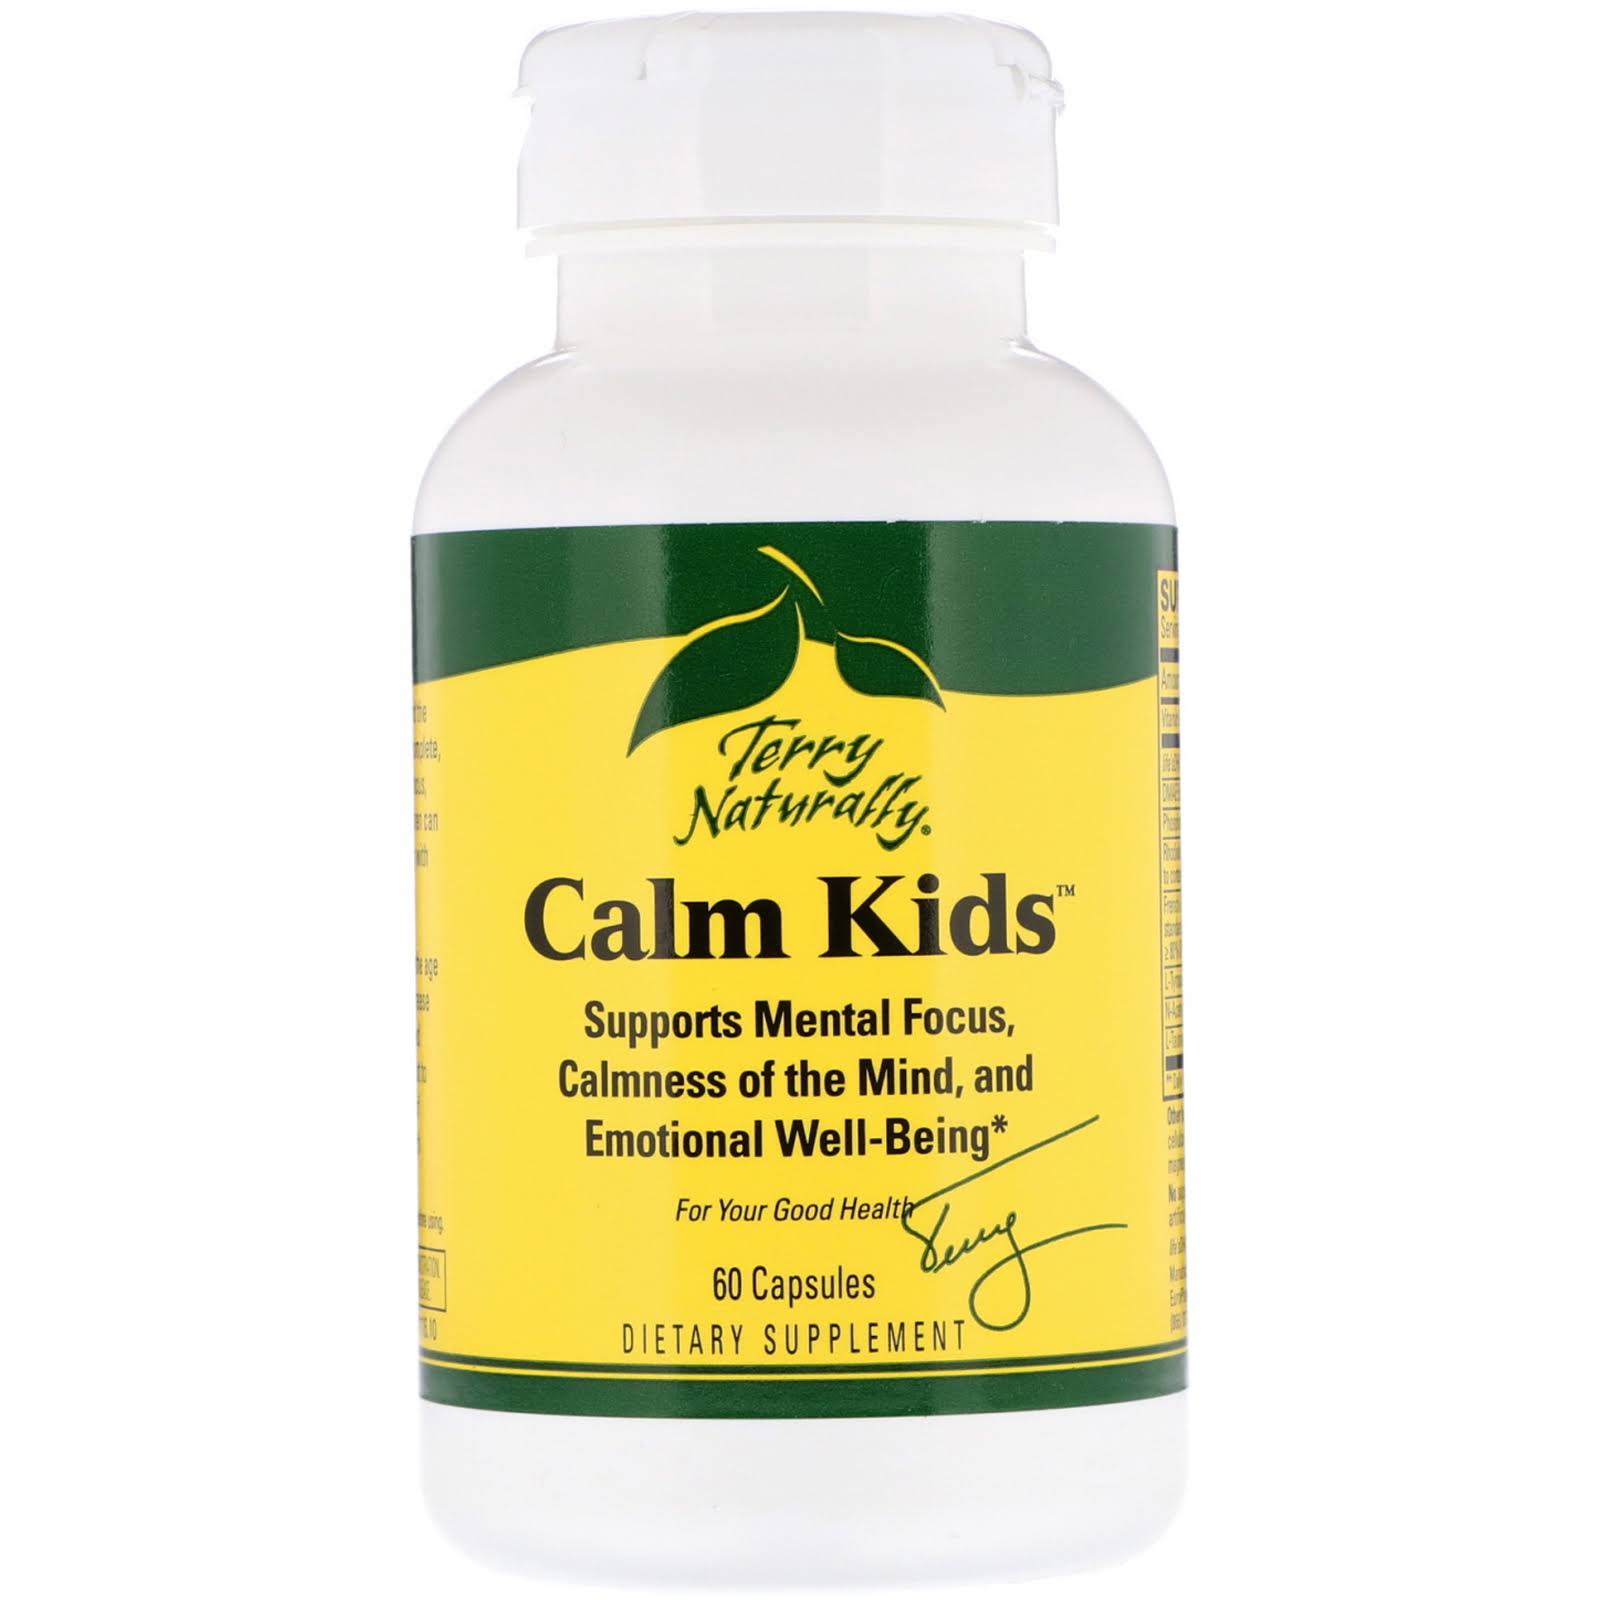 Terry Naturally Calm Kids, Capsules - 60 capsules